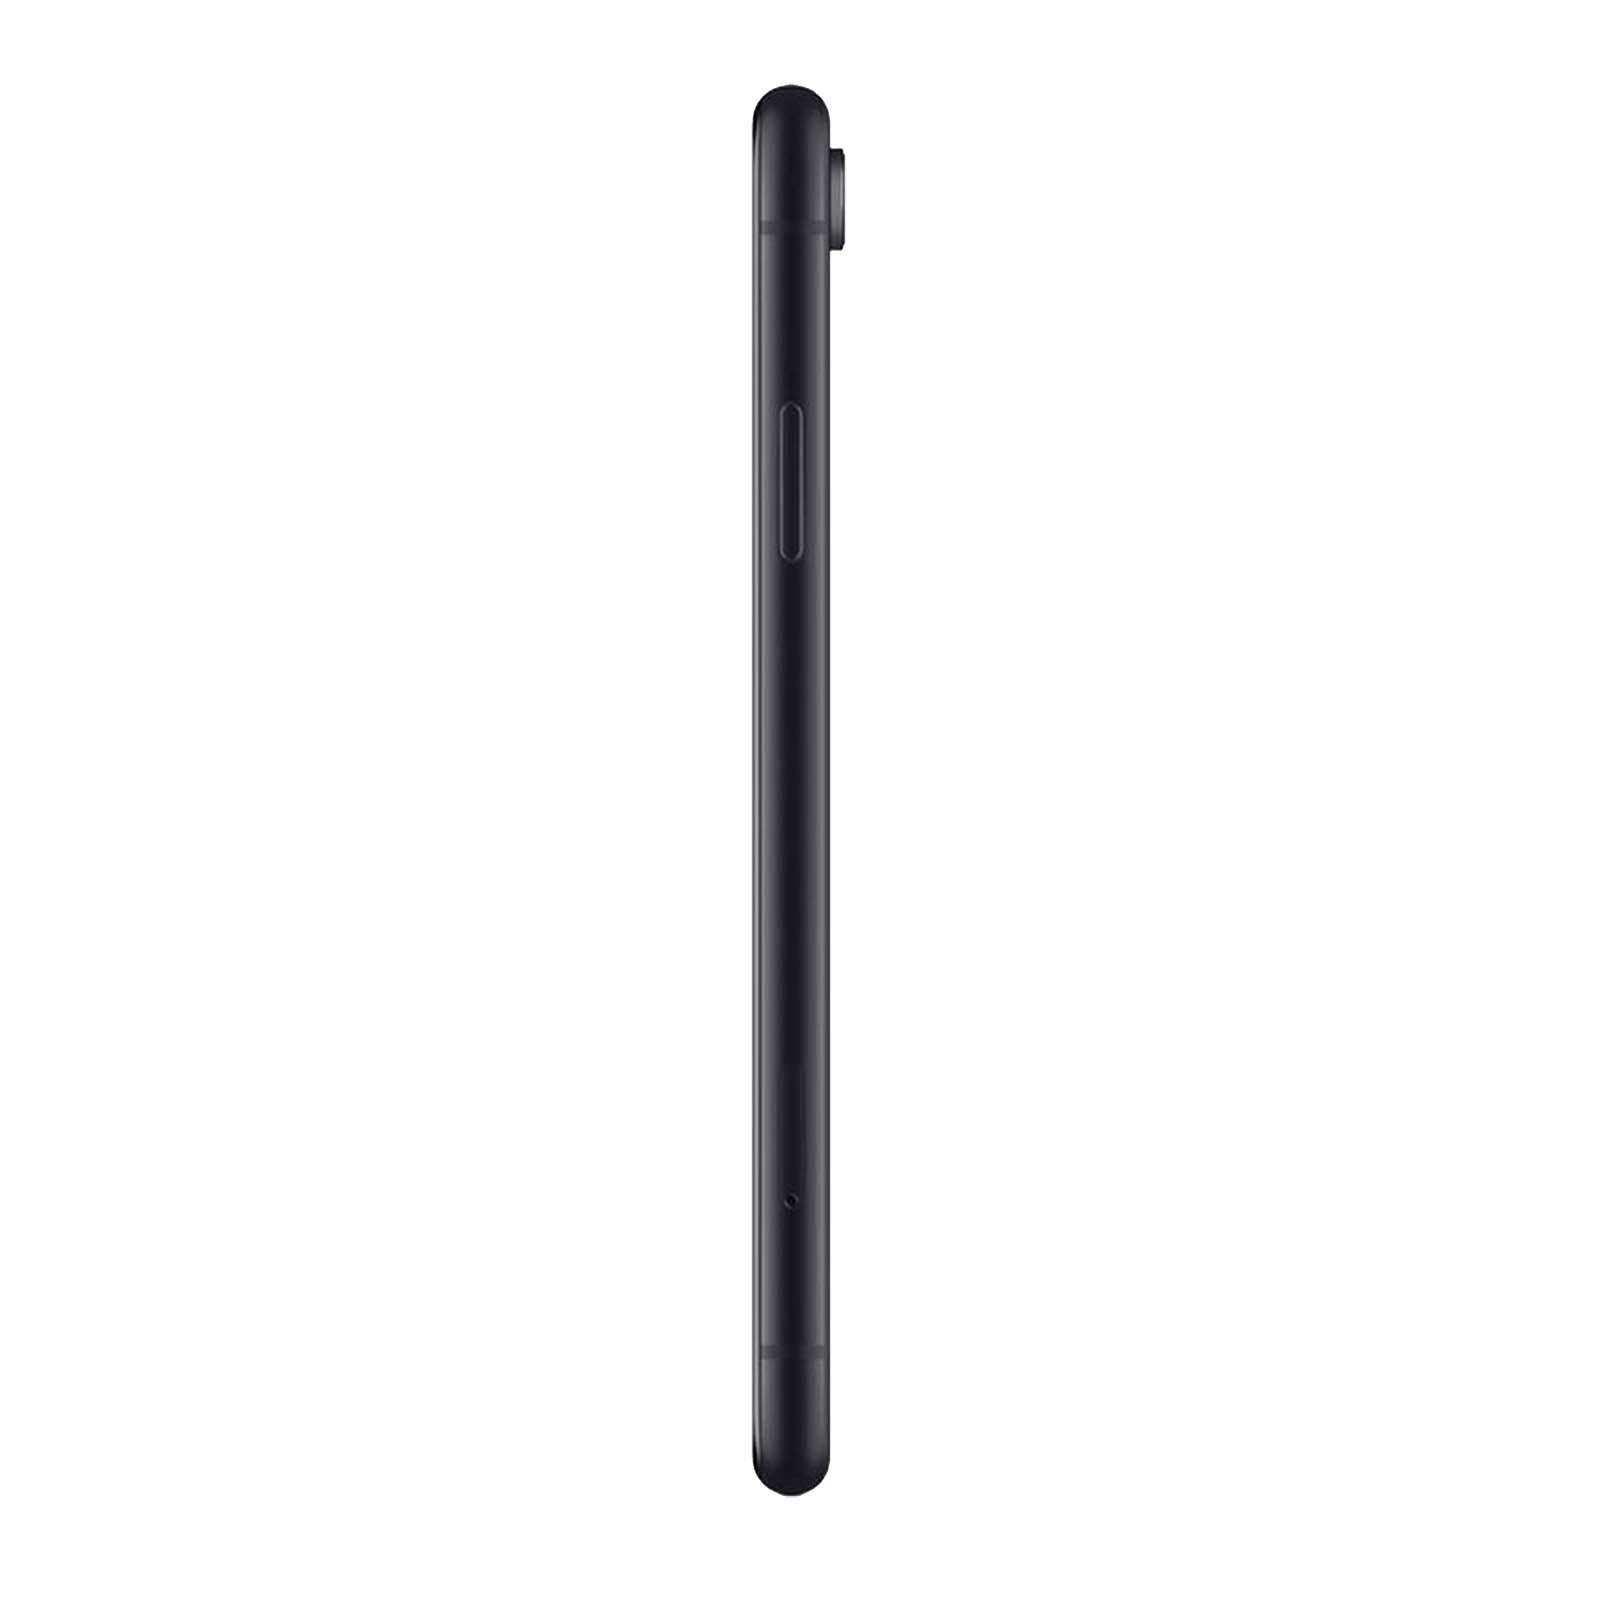 Apple iPhone XR 64GB Black Very Good - Verizon